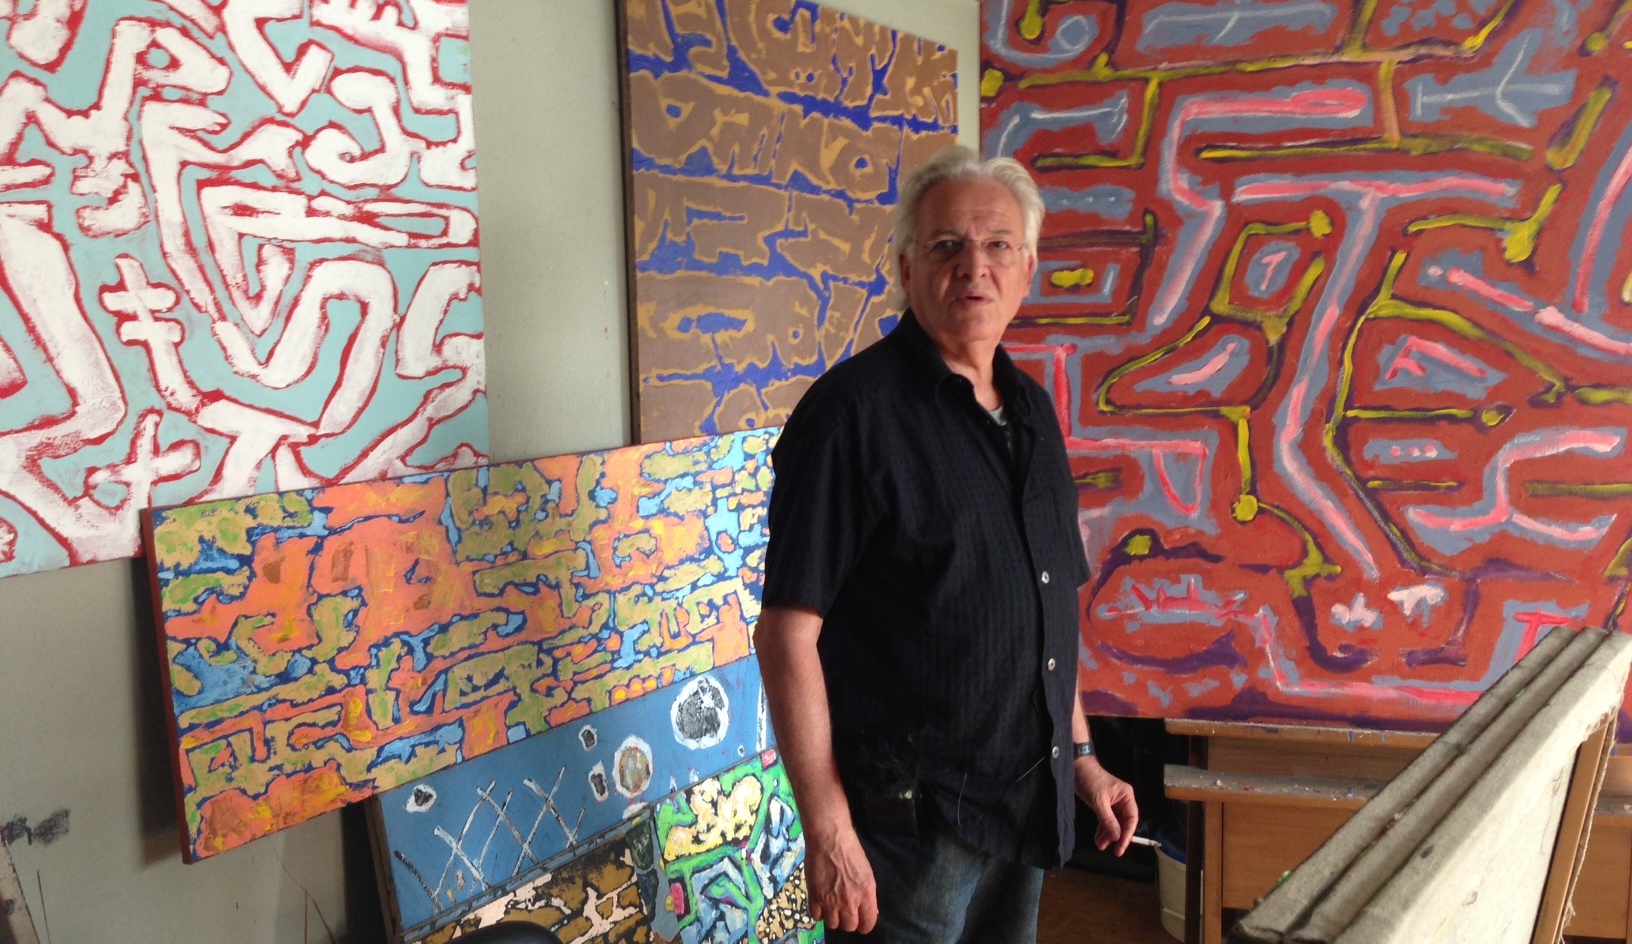 KS in his studio in 2013. Photo by Angelik Riemer